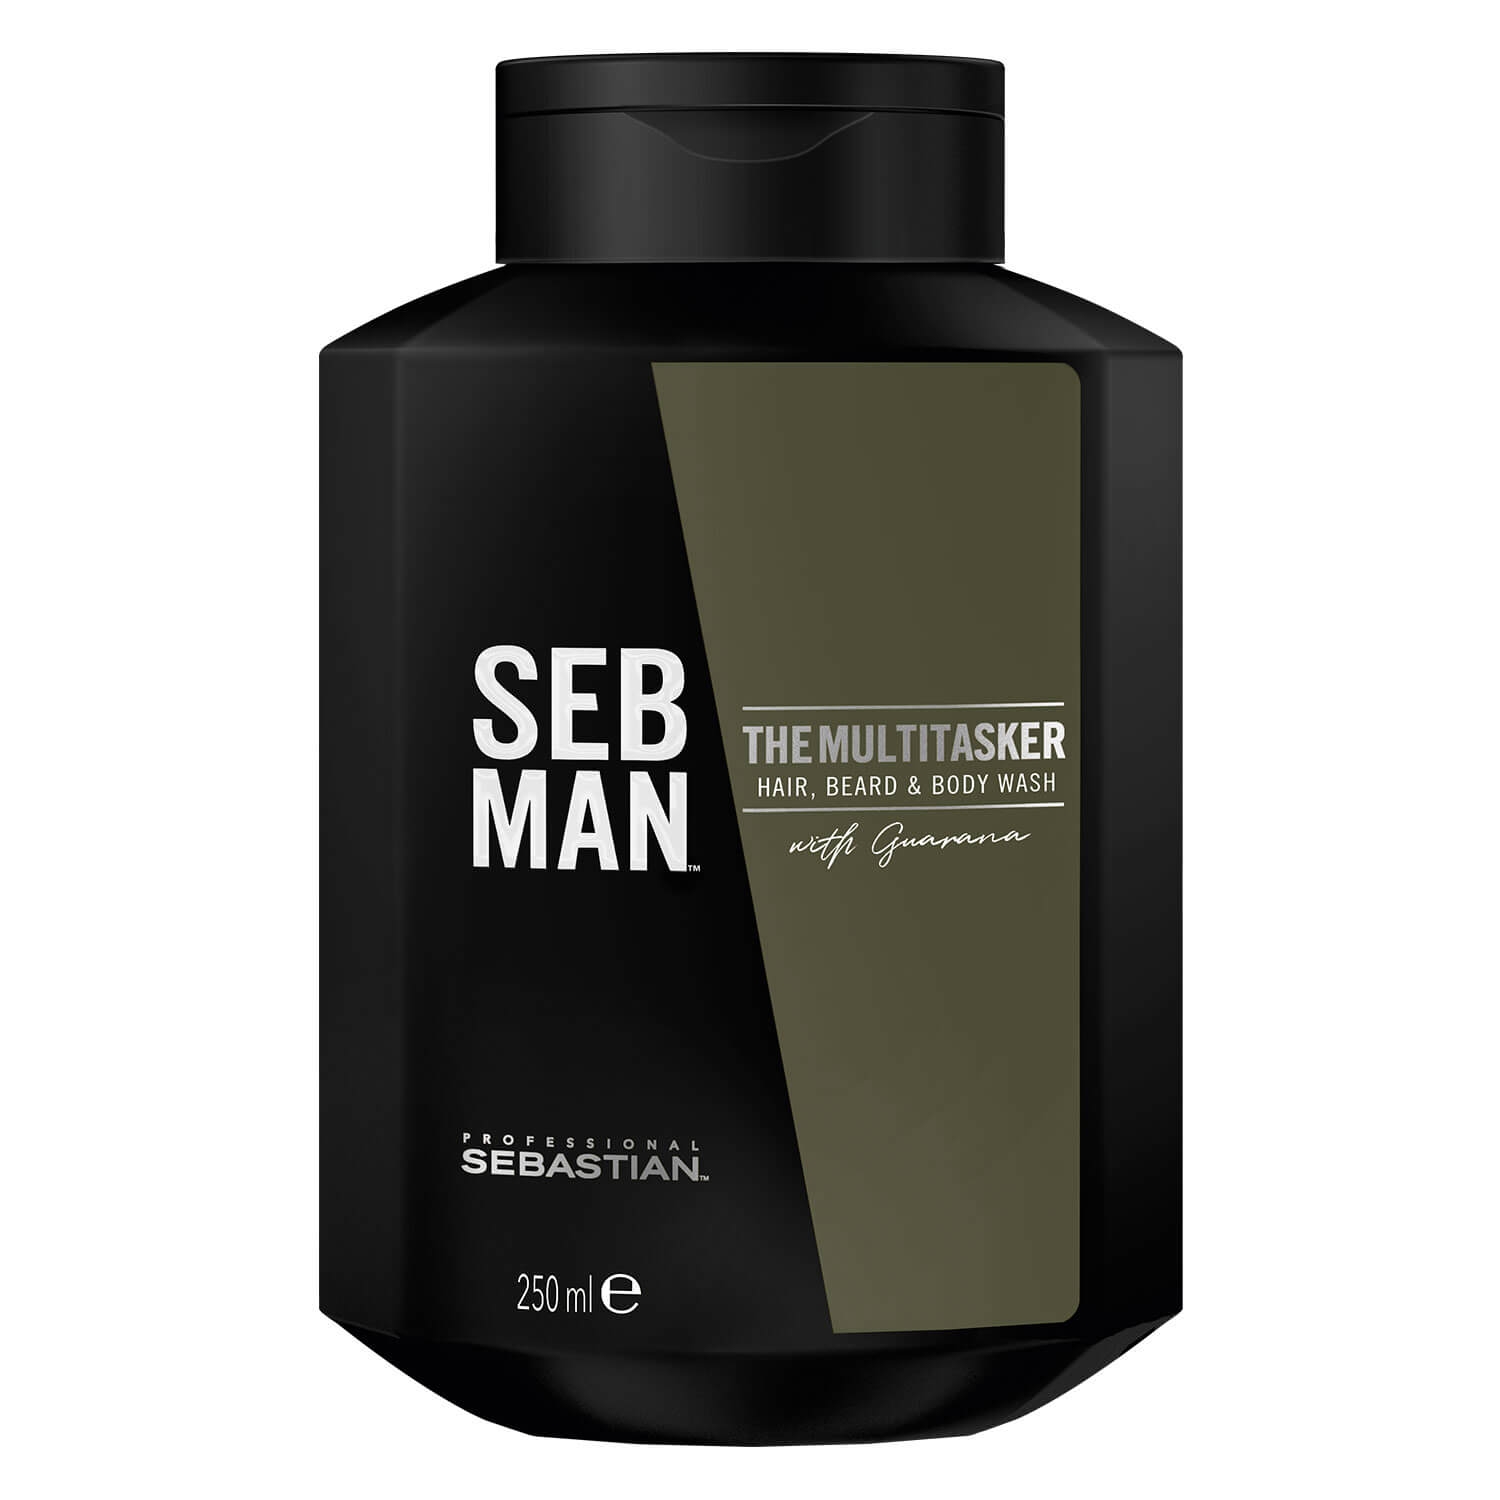 Product image from SEB MAN - The Multitasker Hair Beard & Body Wash